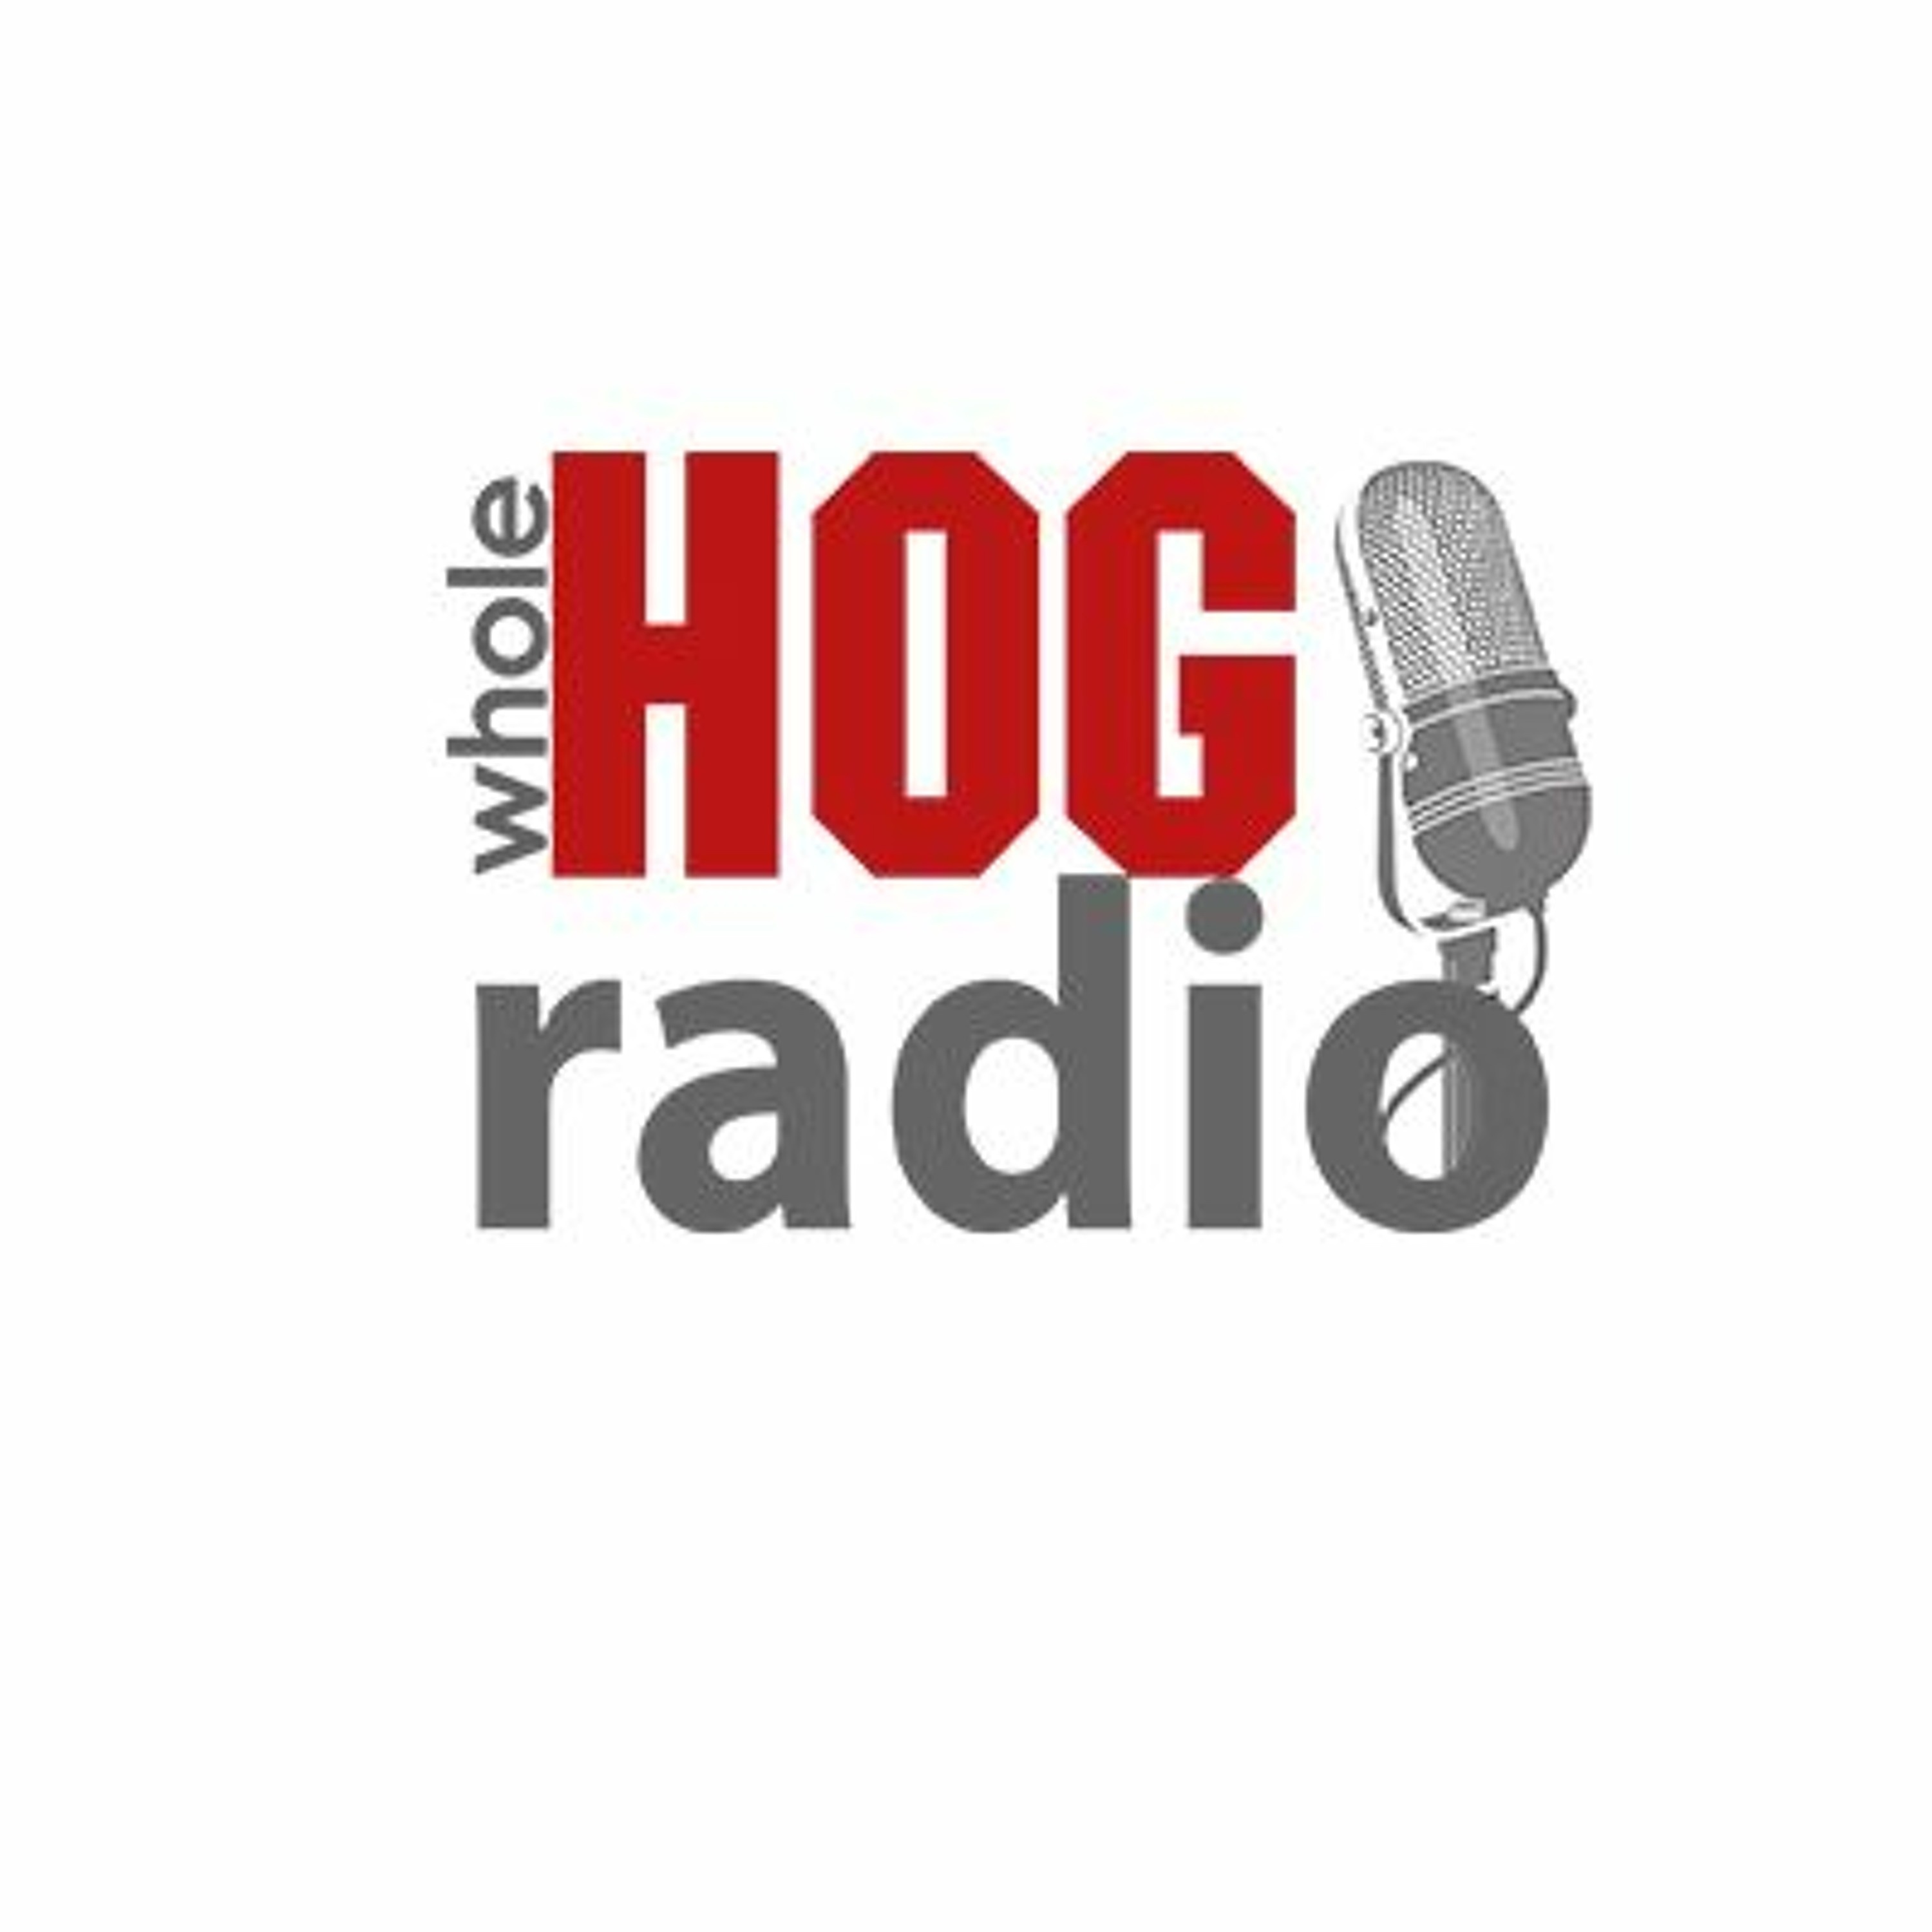 WholeHog Baseball Podcast: Previewing Vanderbilt with ESPN's Chris Burke and Vandy voice Joe Fisher